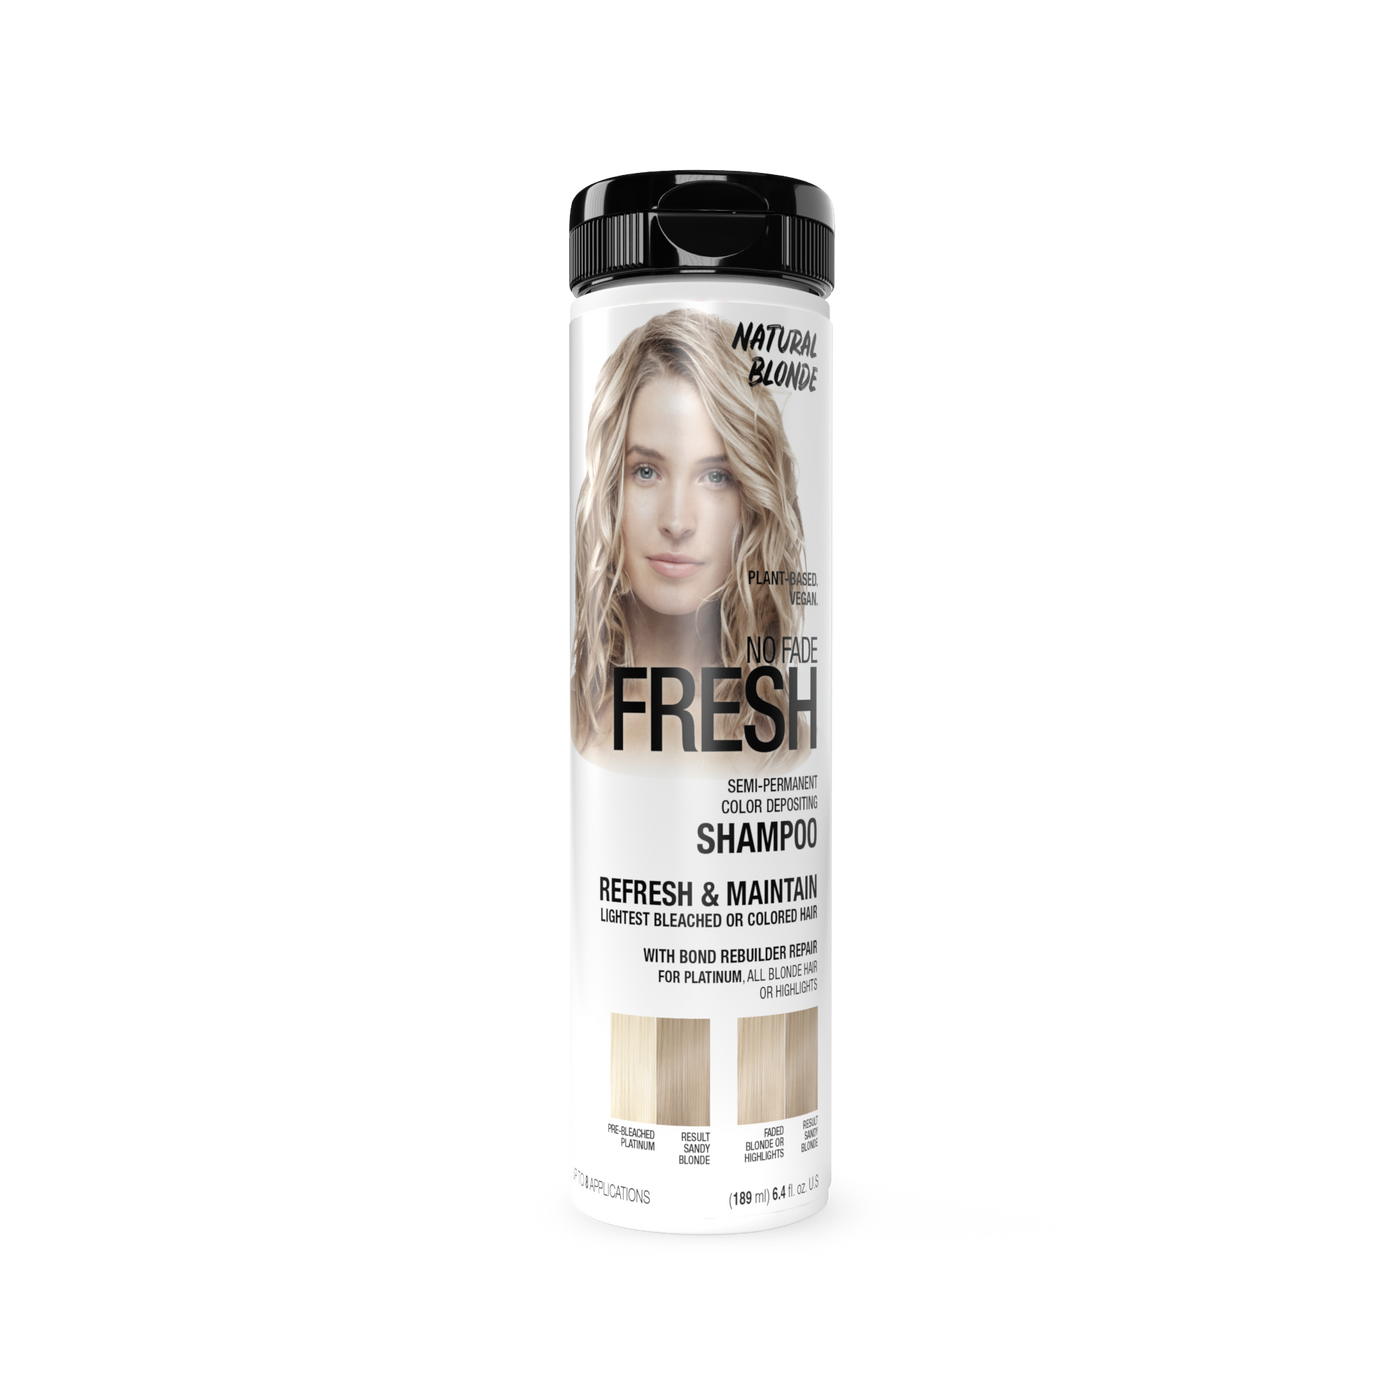 No Fade Fresh Semi Permanent Colour Depositing Shampoo Natural Blonde 189ml